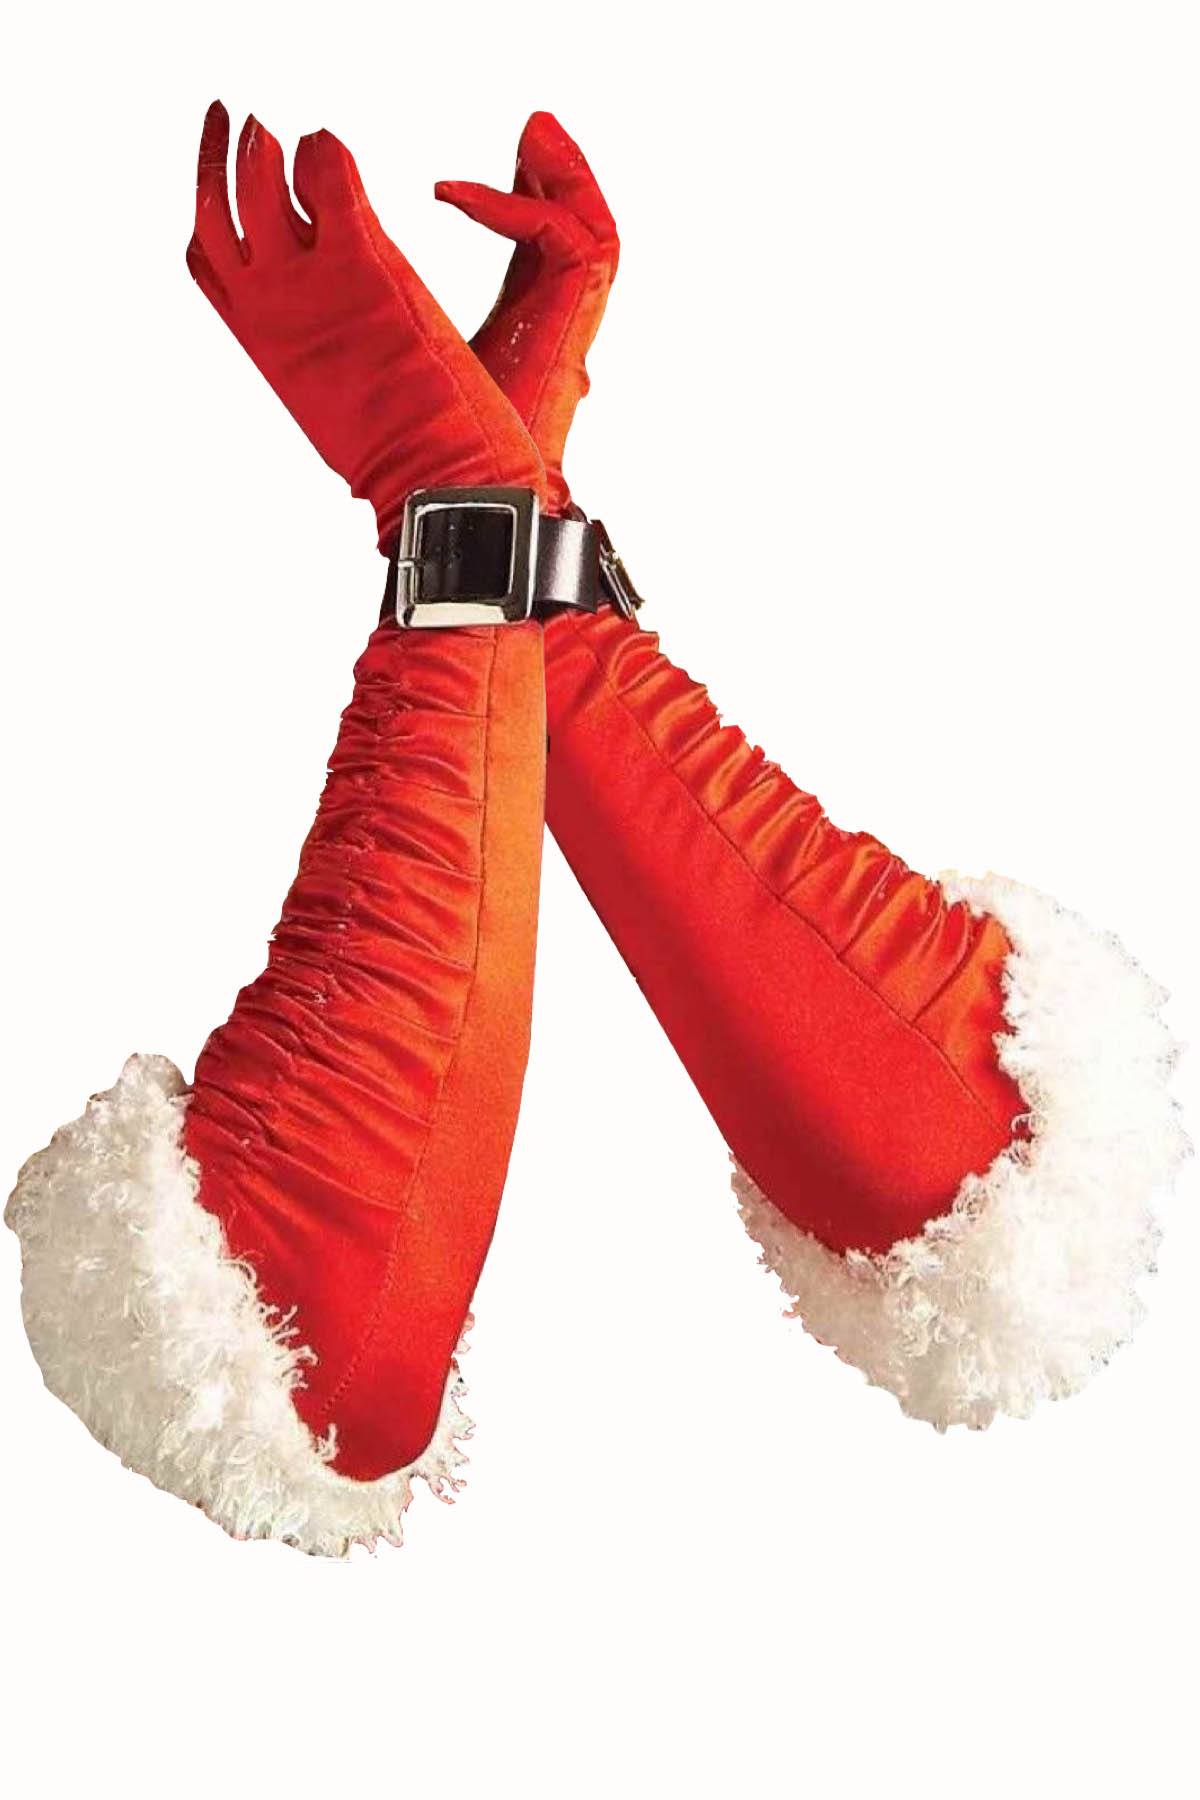 Rubies Costume Red Satin Miss Santa Gloves